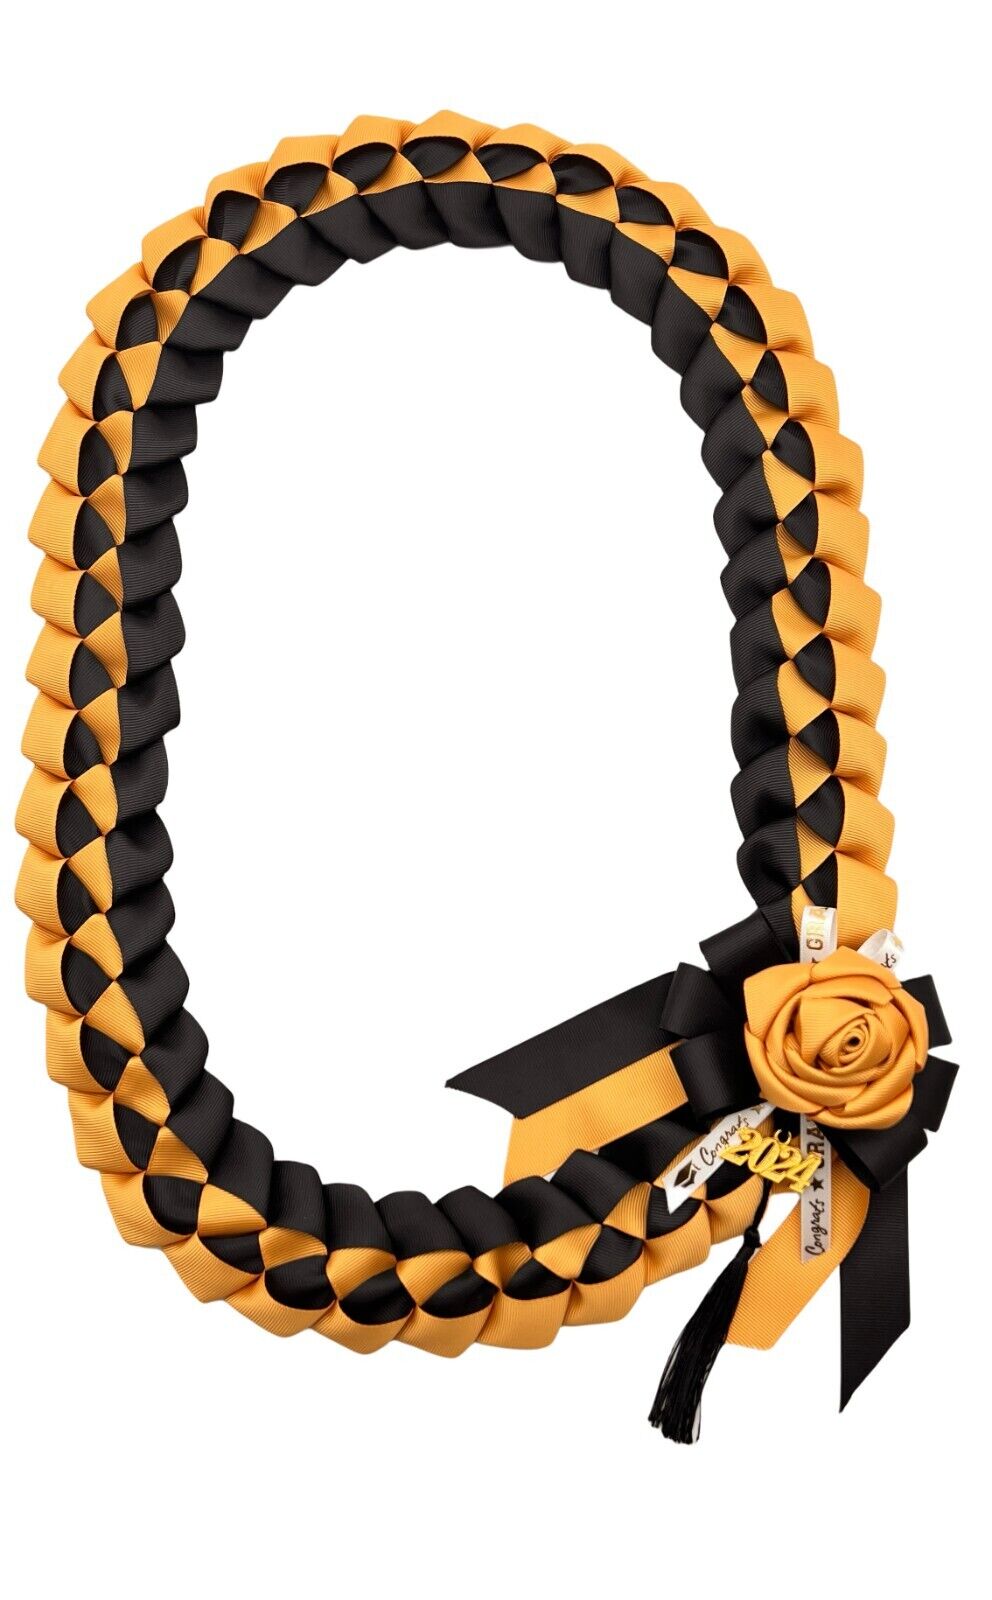 Grosgrain Ribbon Graduation Leis-Gold & Black School Colors 